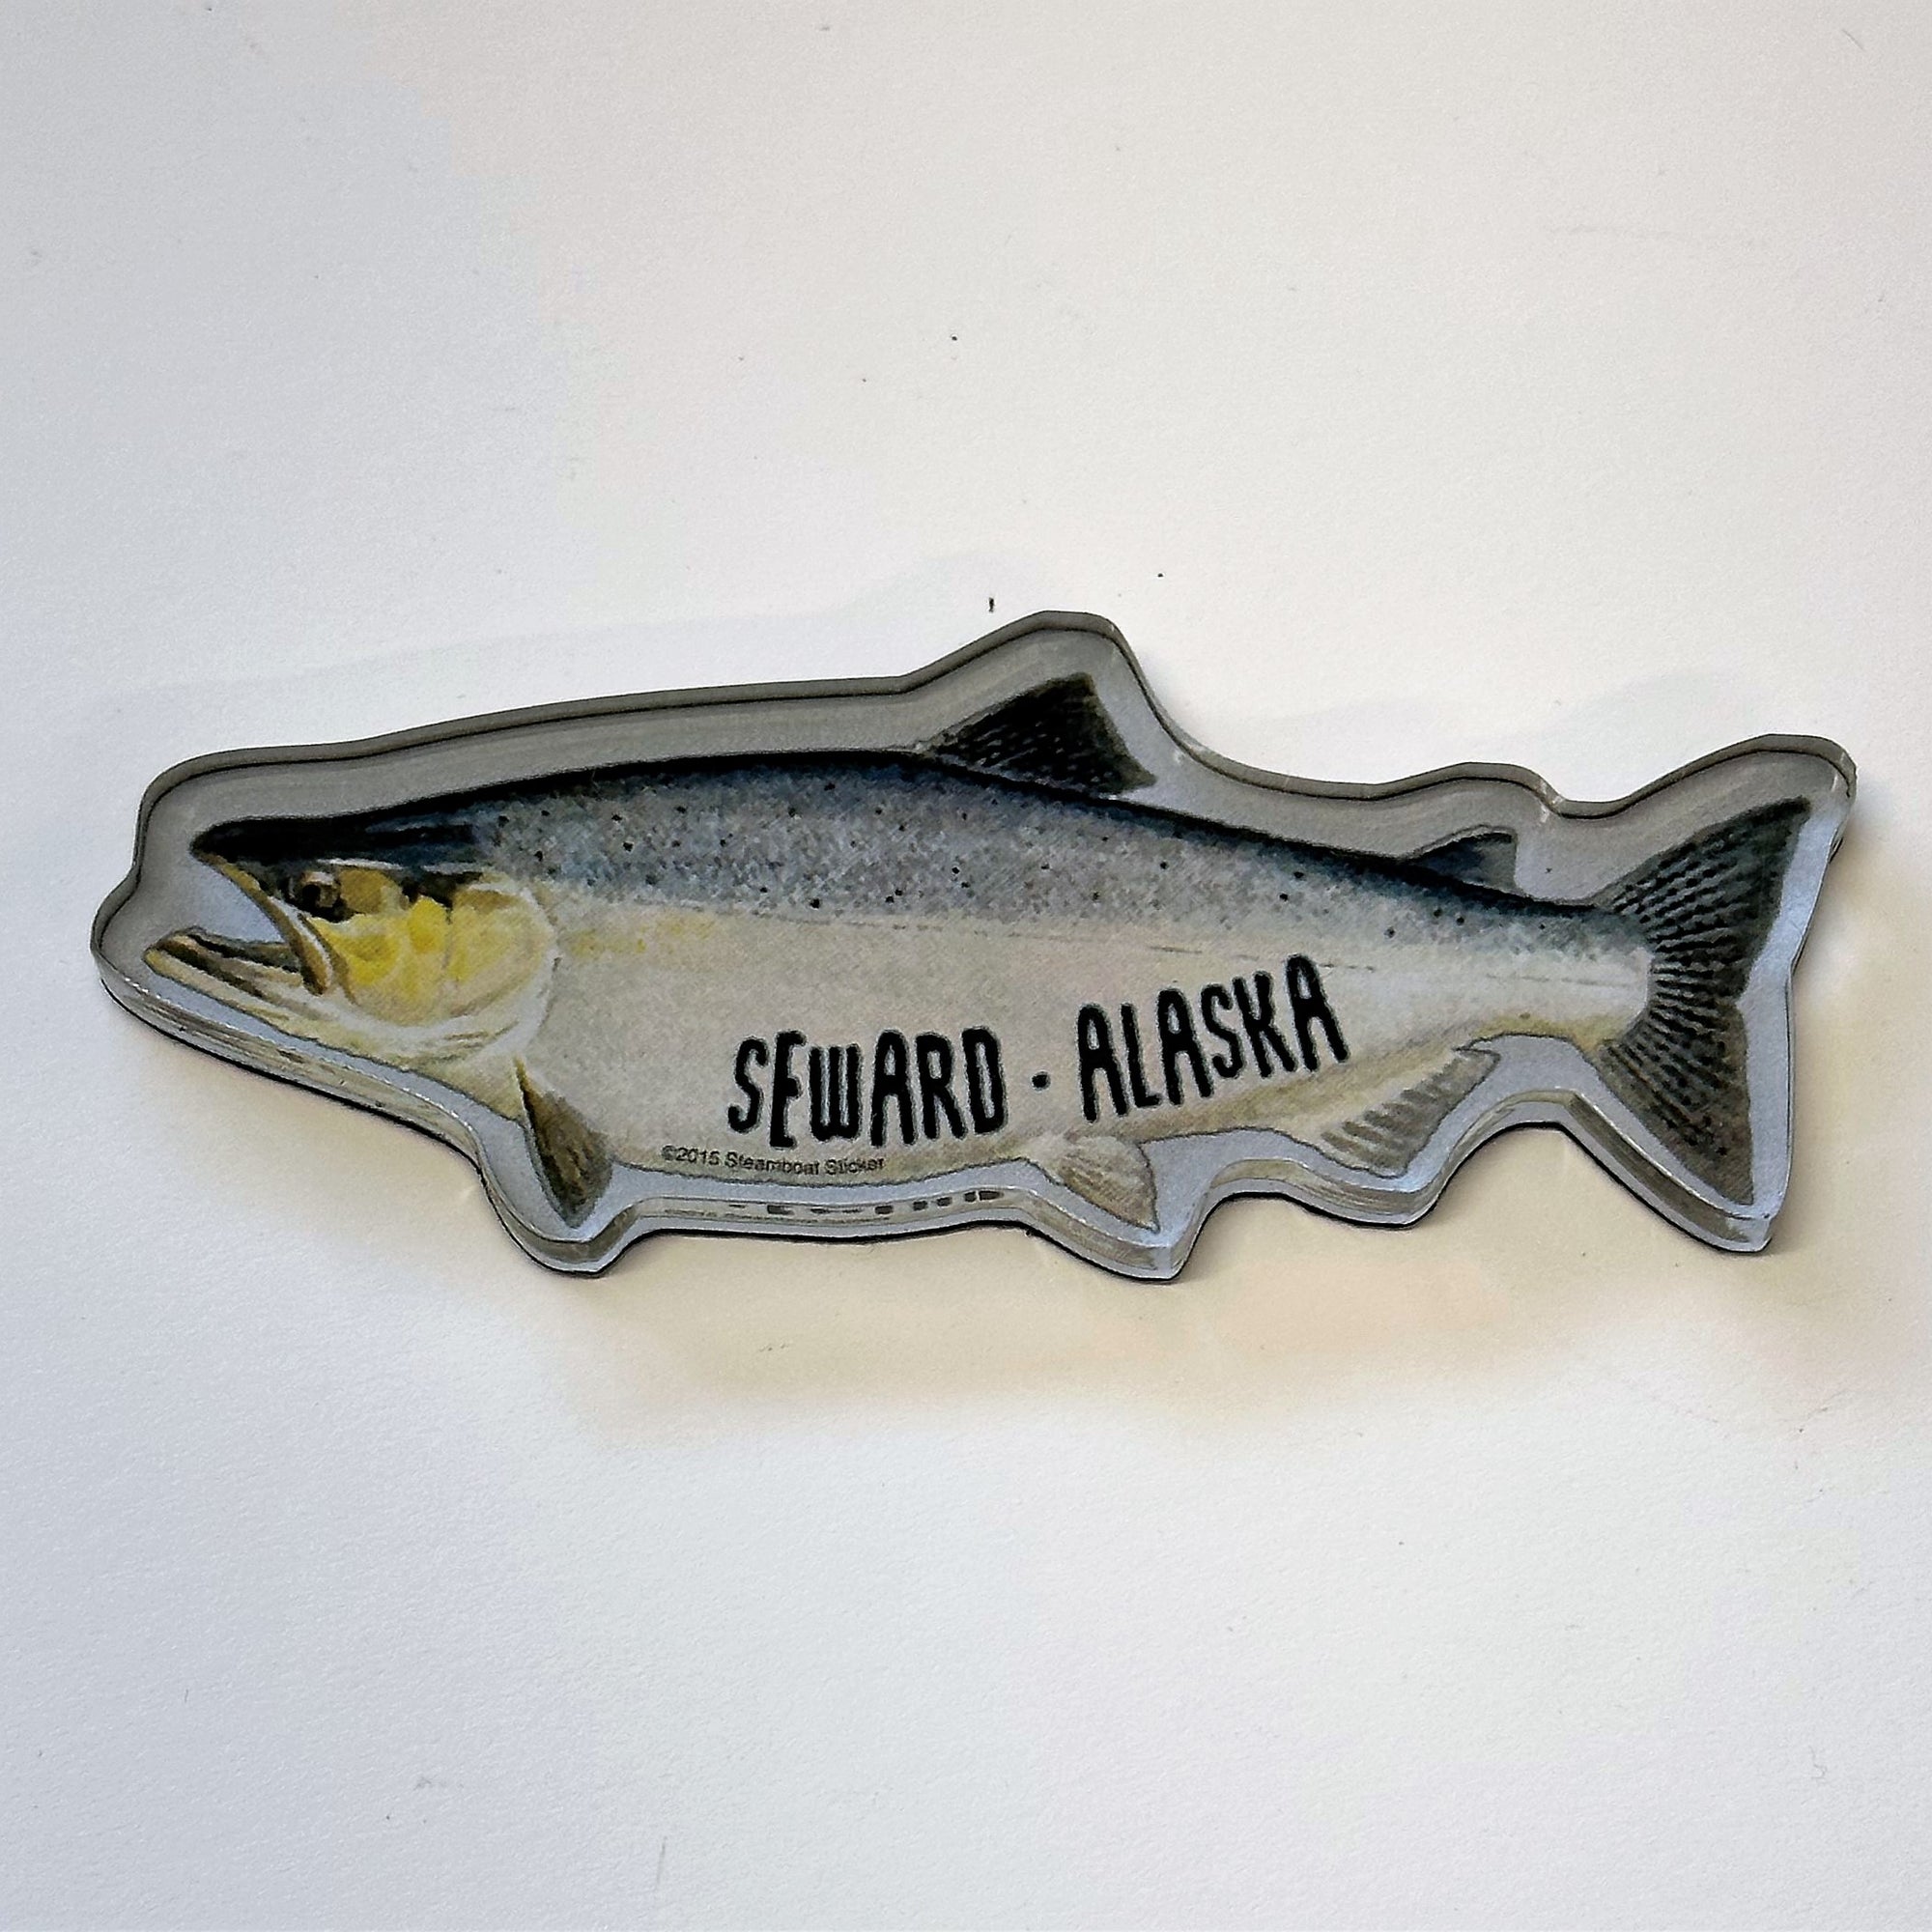 Alaska Map Cork Coaster